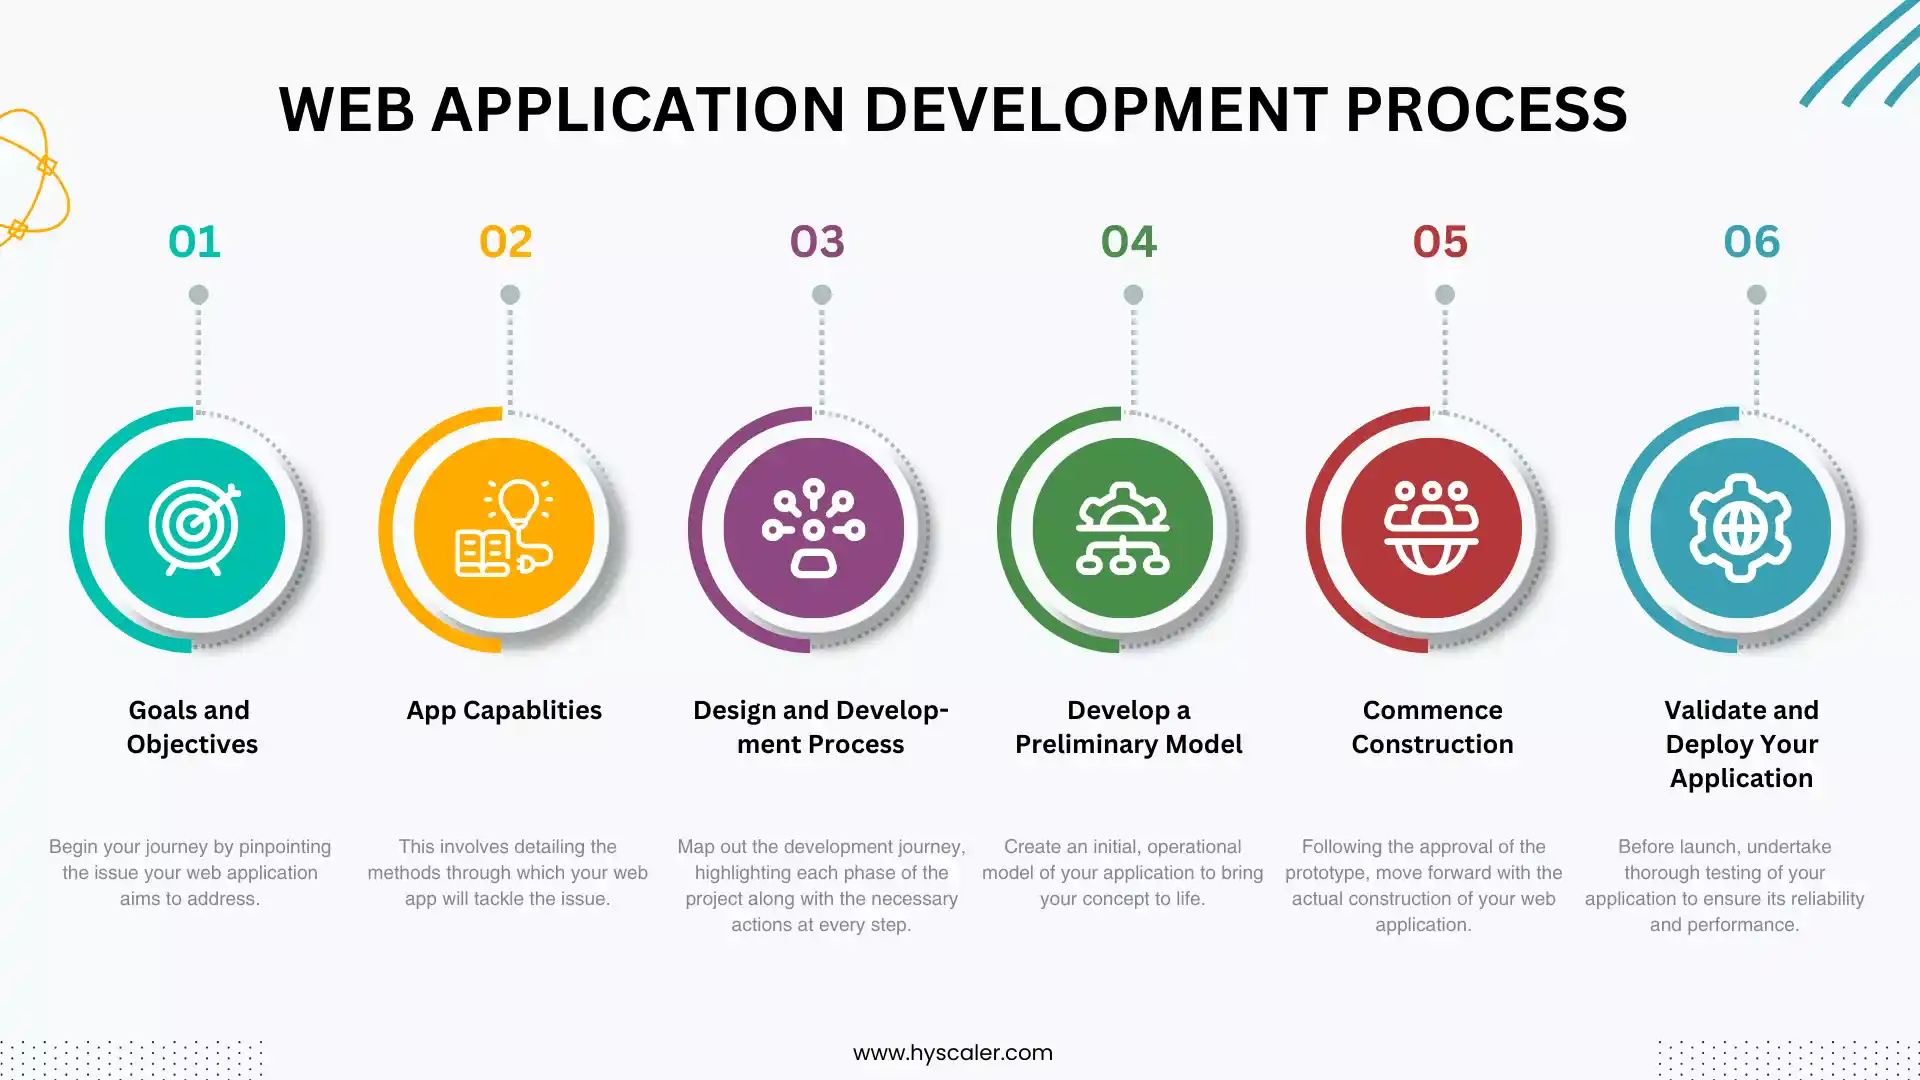 Web application development process